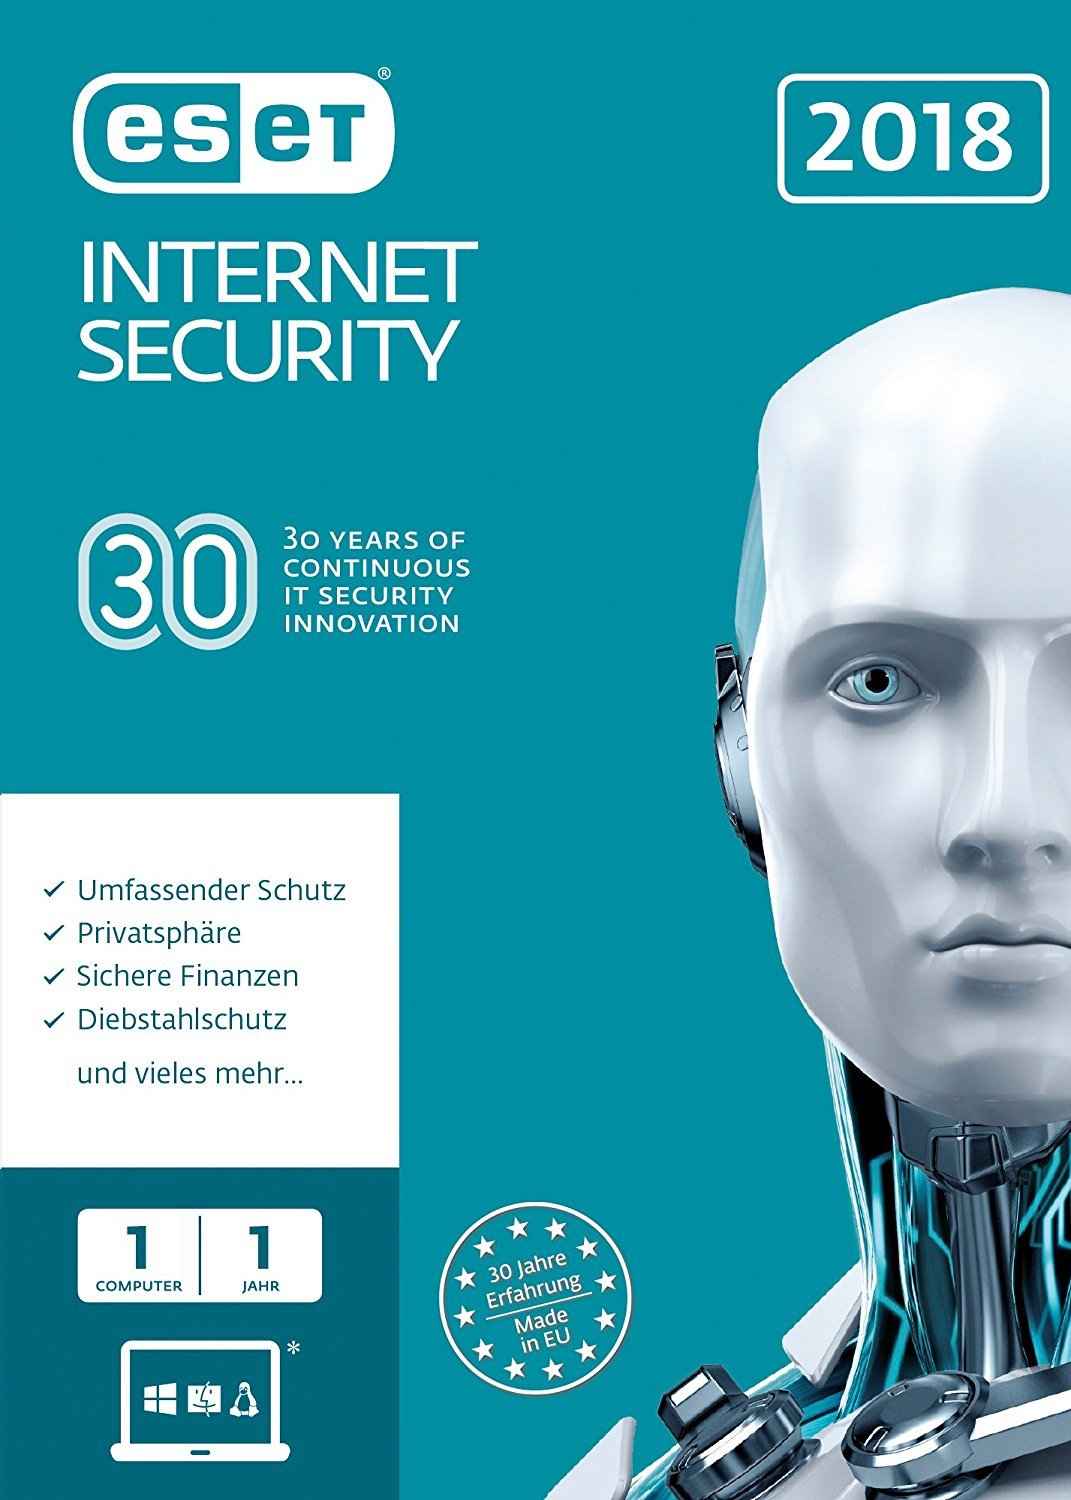 download eset internet security 15.1 12